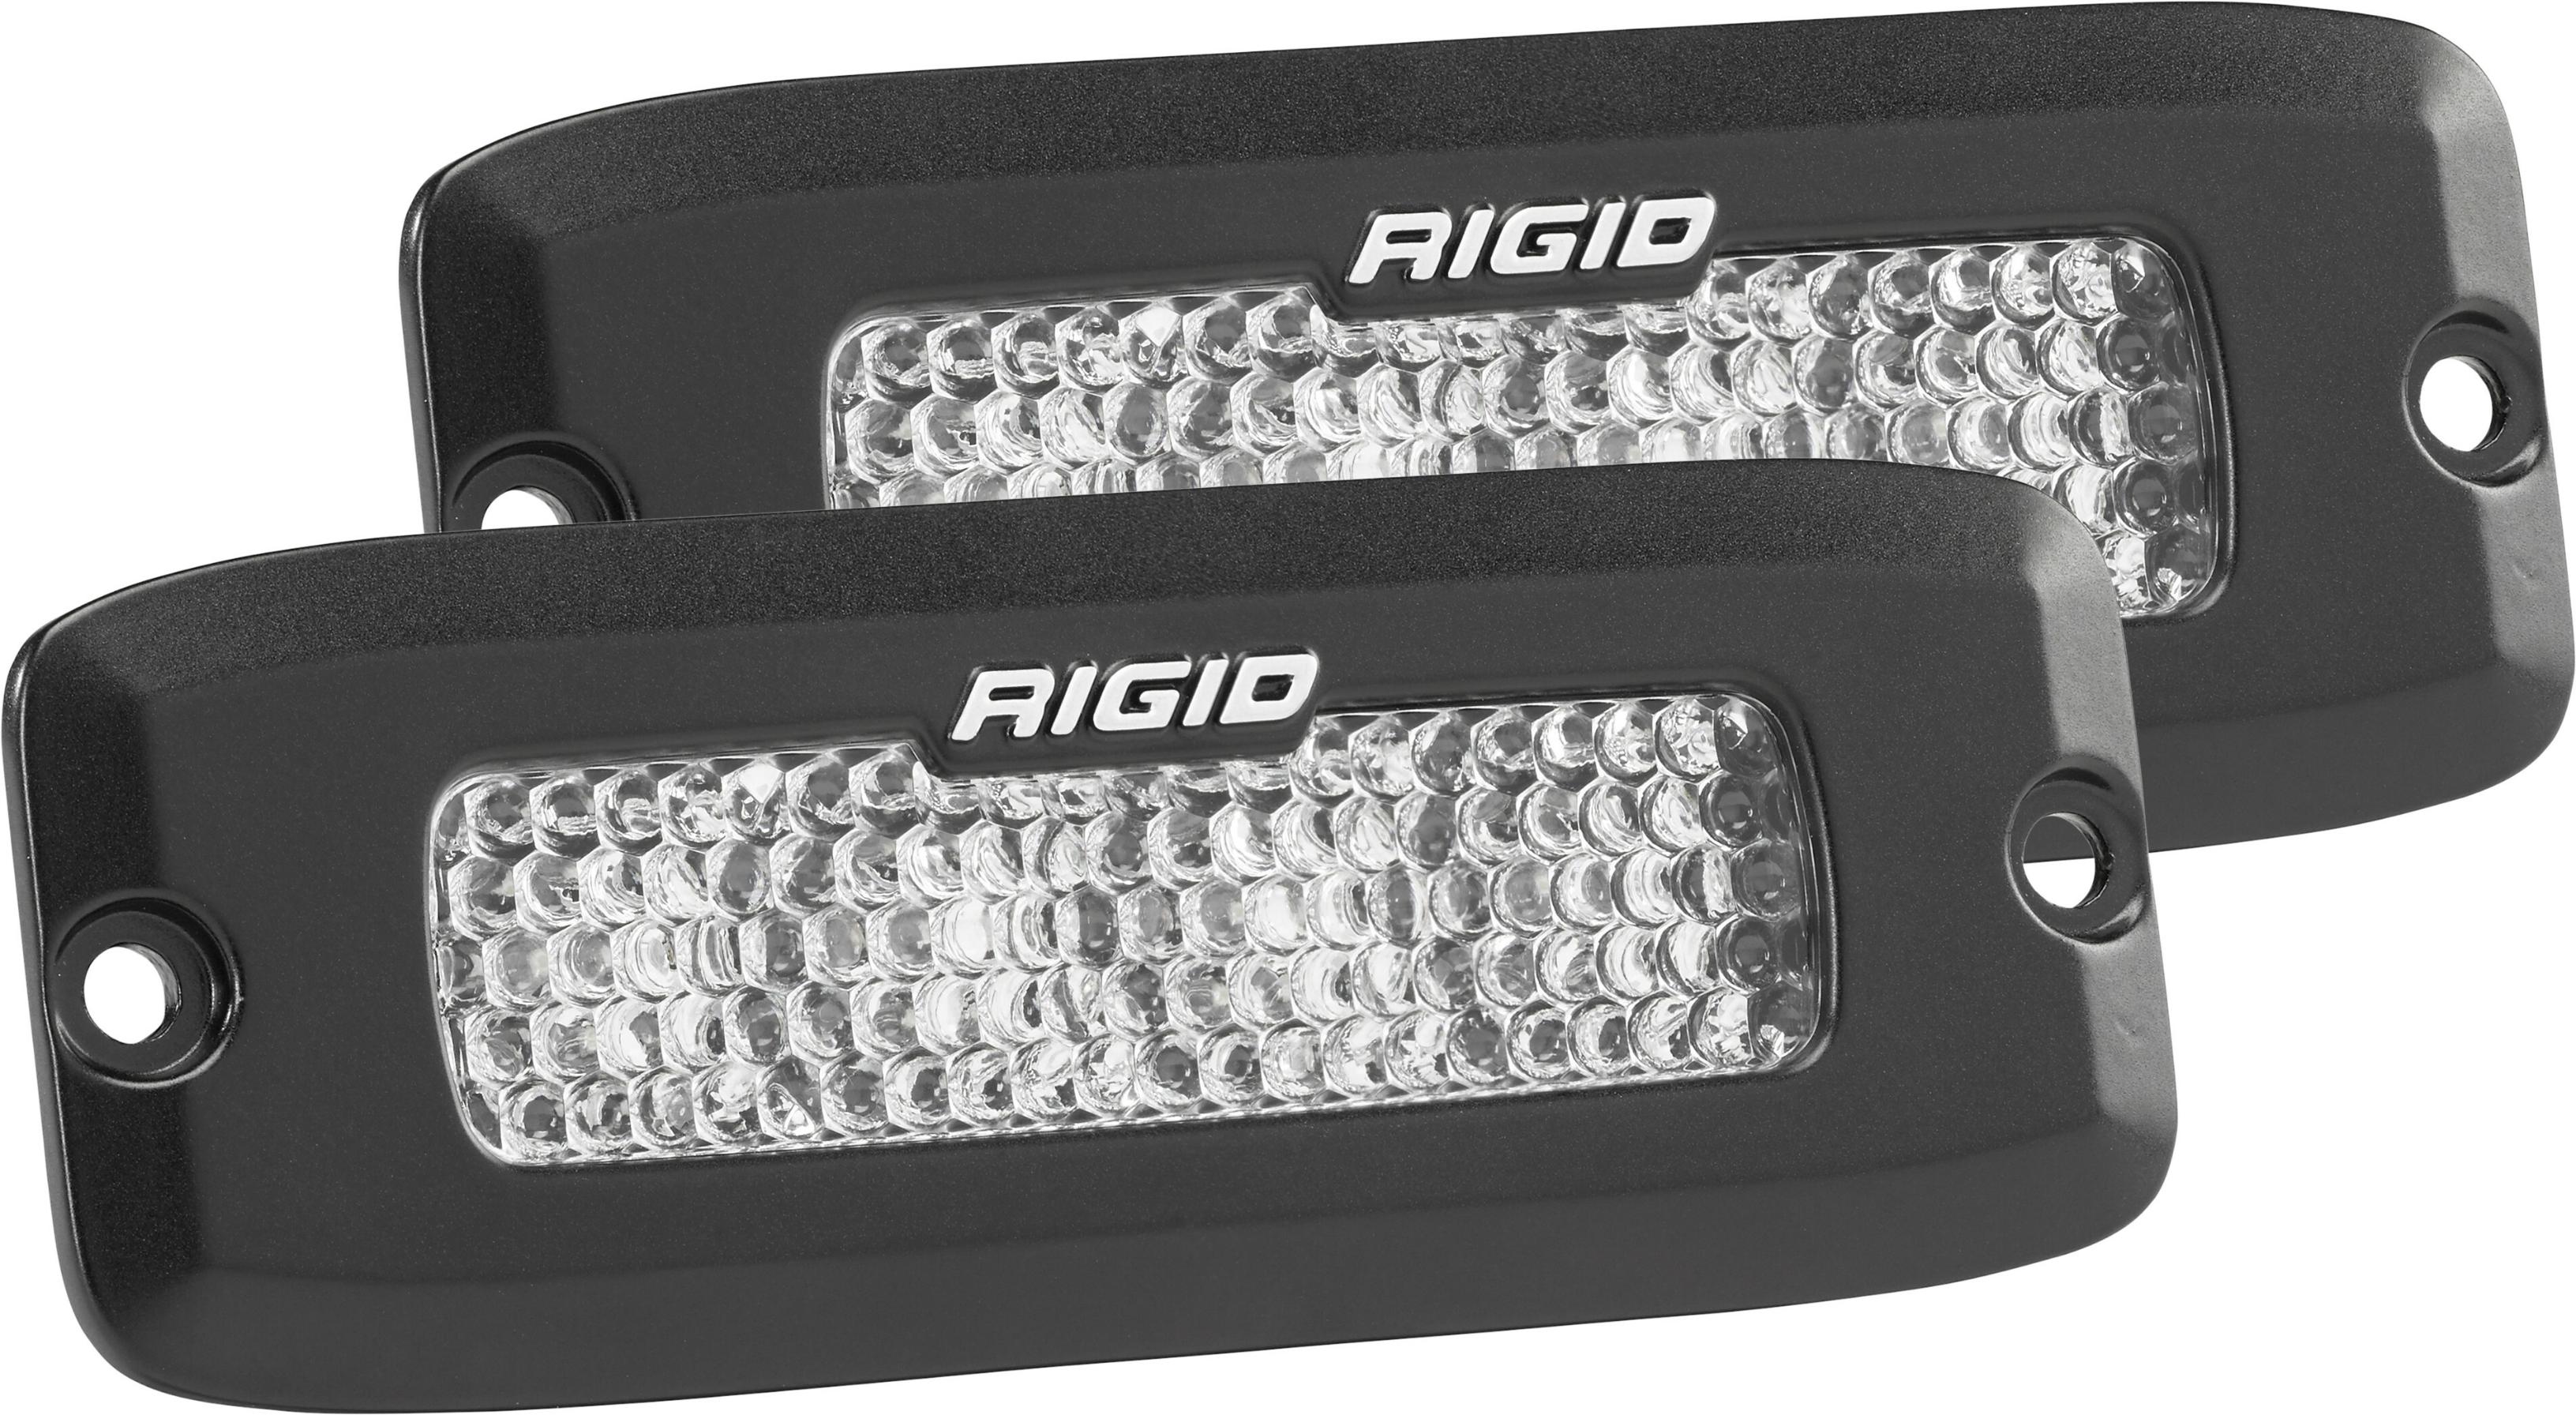 Rigid - Sr-q Pro Diffused Backup Flush Mount Kit - 980033